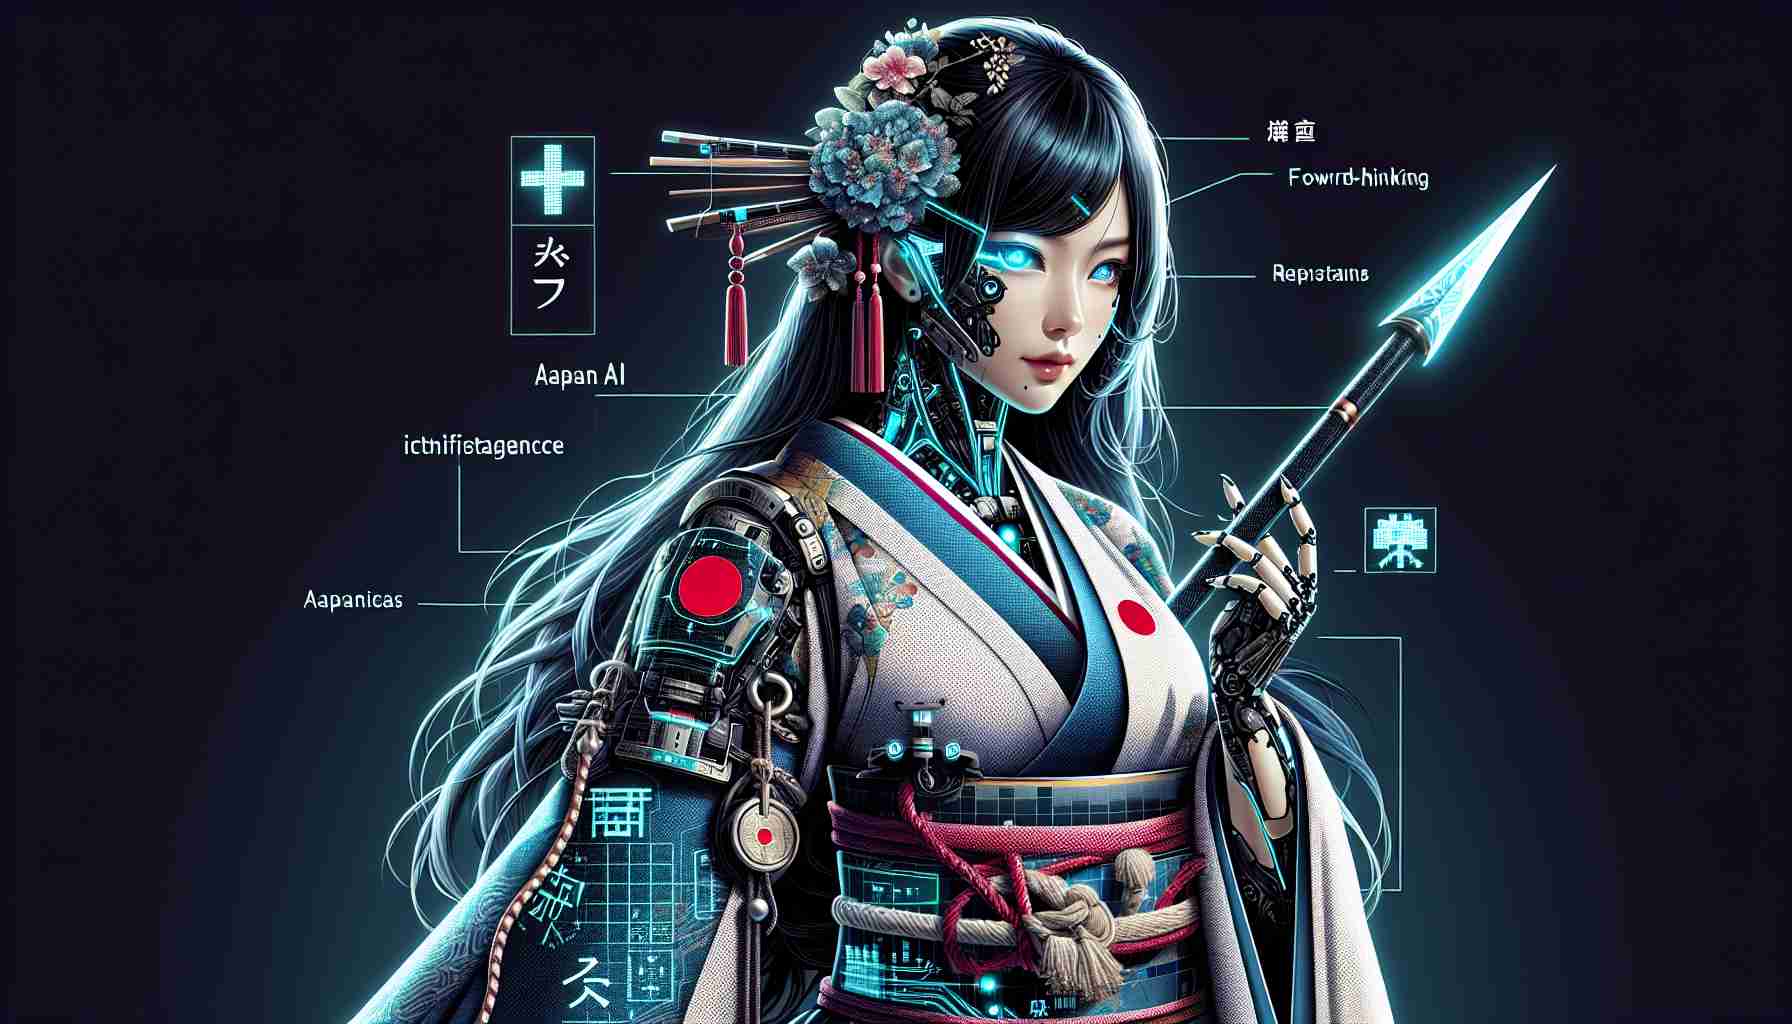 Sakana AI: Spearheading Japan’s Renaissance in Artificial Intelligence